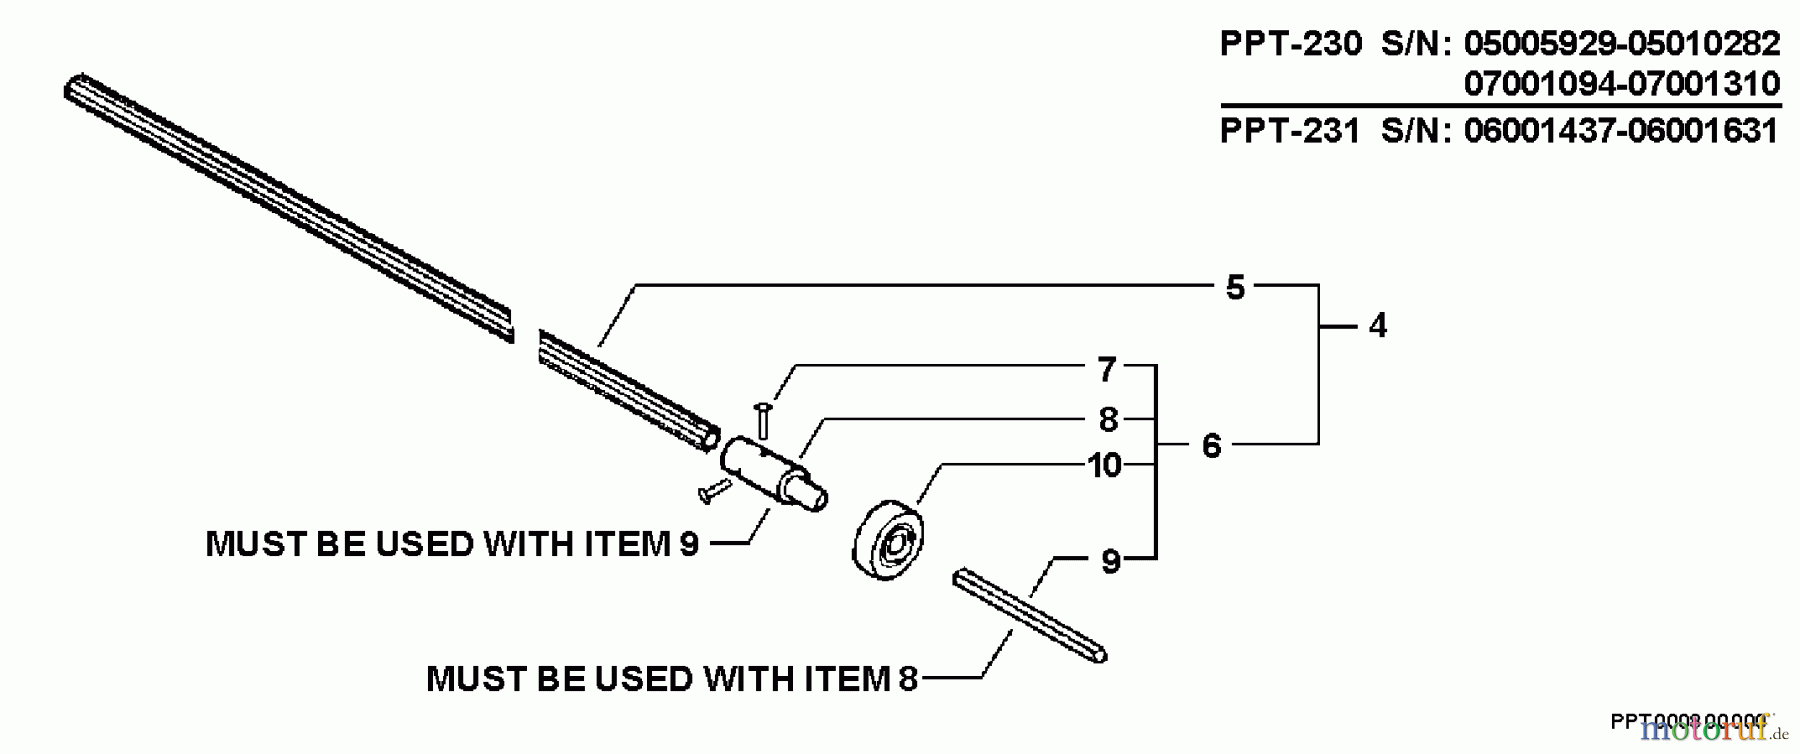  Echo Hochentaster PPT-230 - Echo Pole Saw / Pruner, S/N: 05001001 - 05999999 Driveshaft, Connector  S/N: 05005929 - 05010282